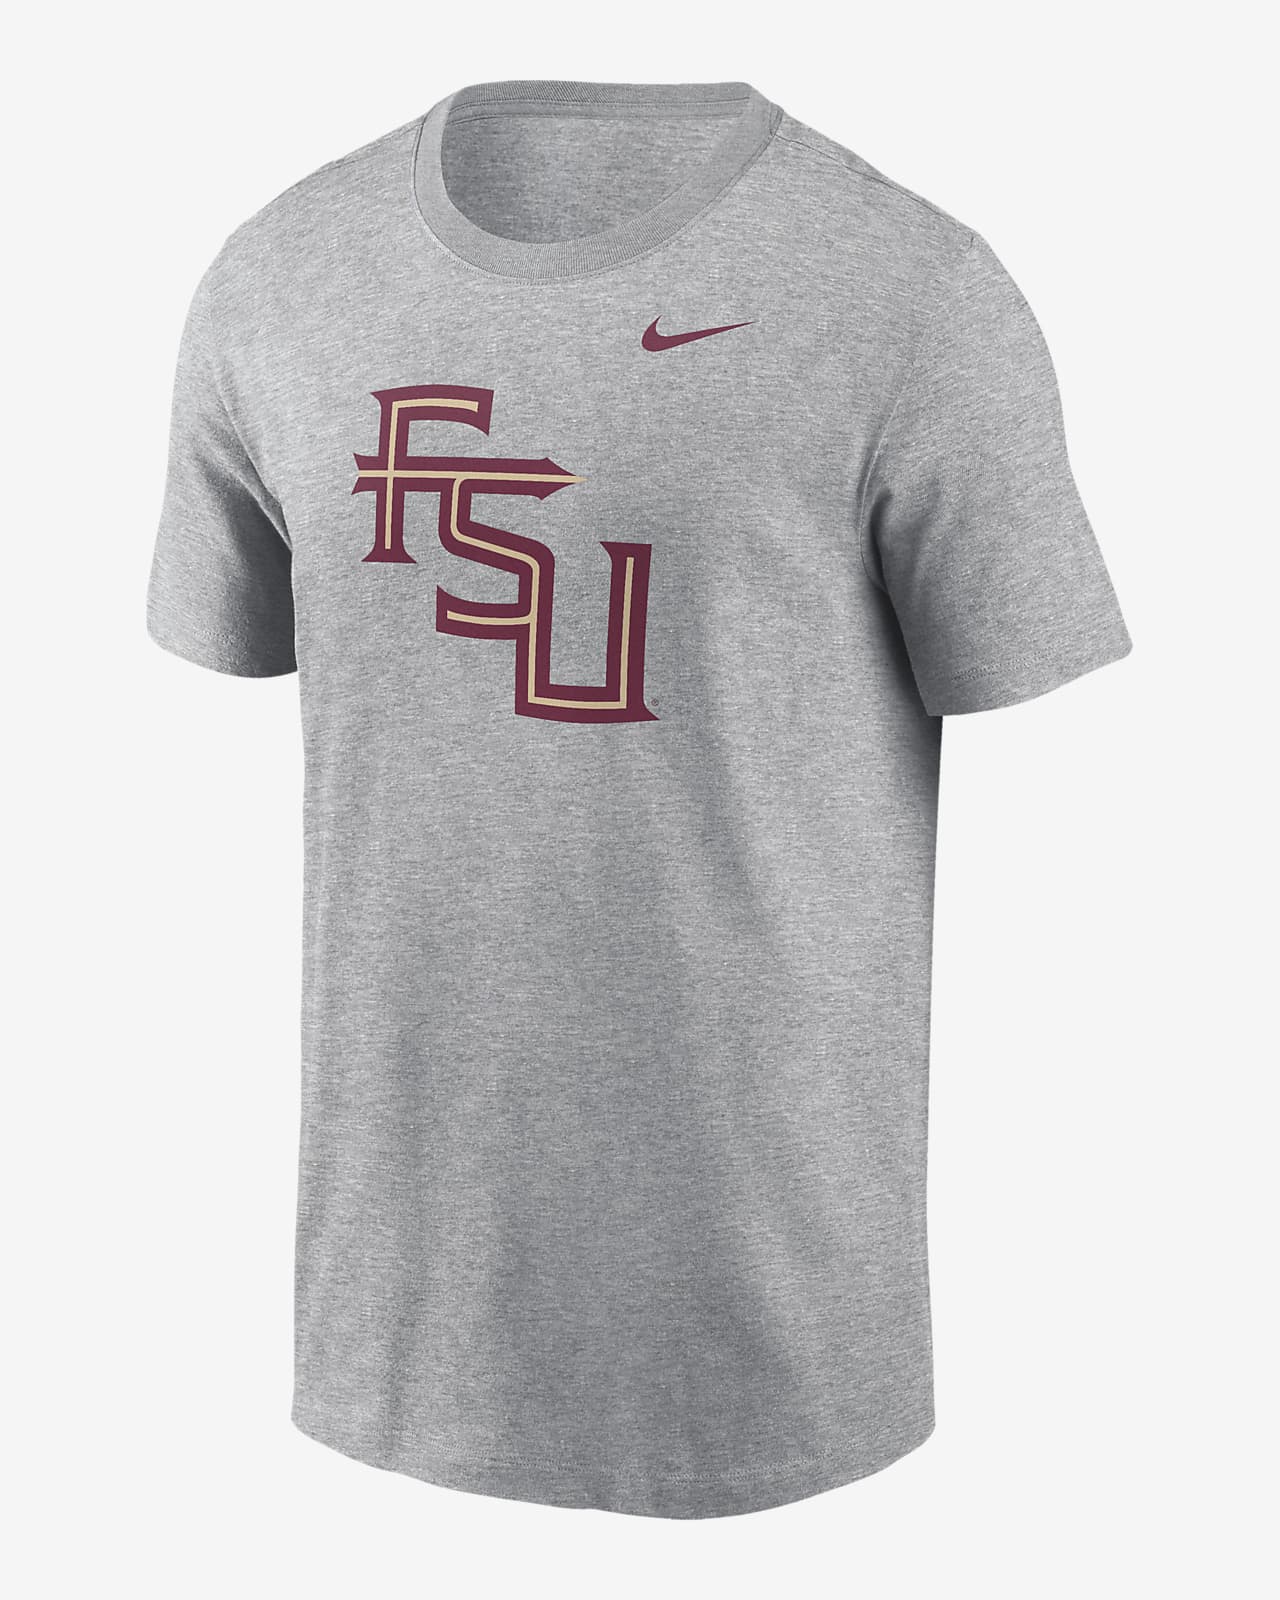 Florida State Seminoles Primetime Evergreen Alternate Logo Men's Nike College T-Shirt